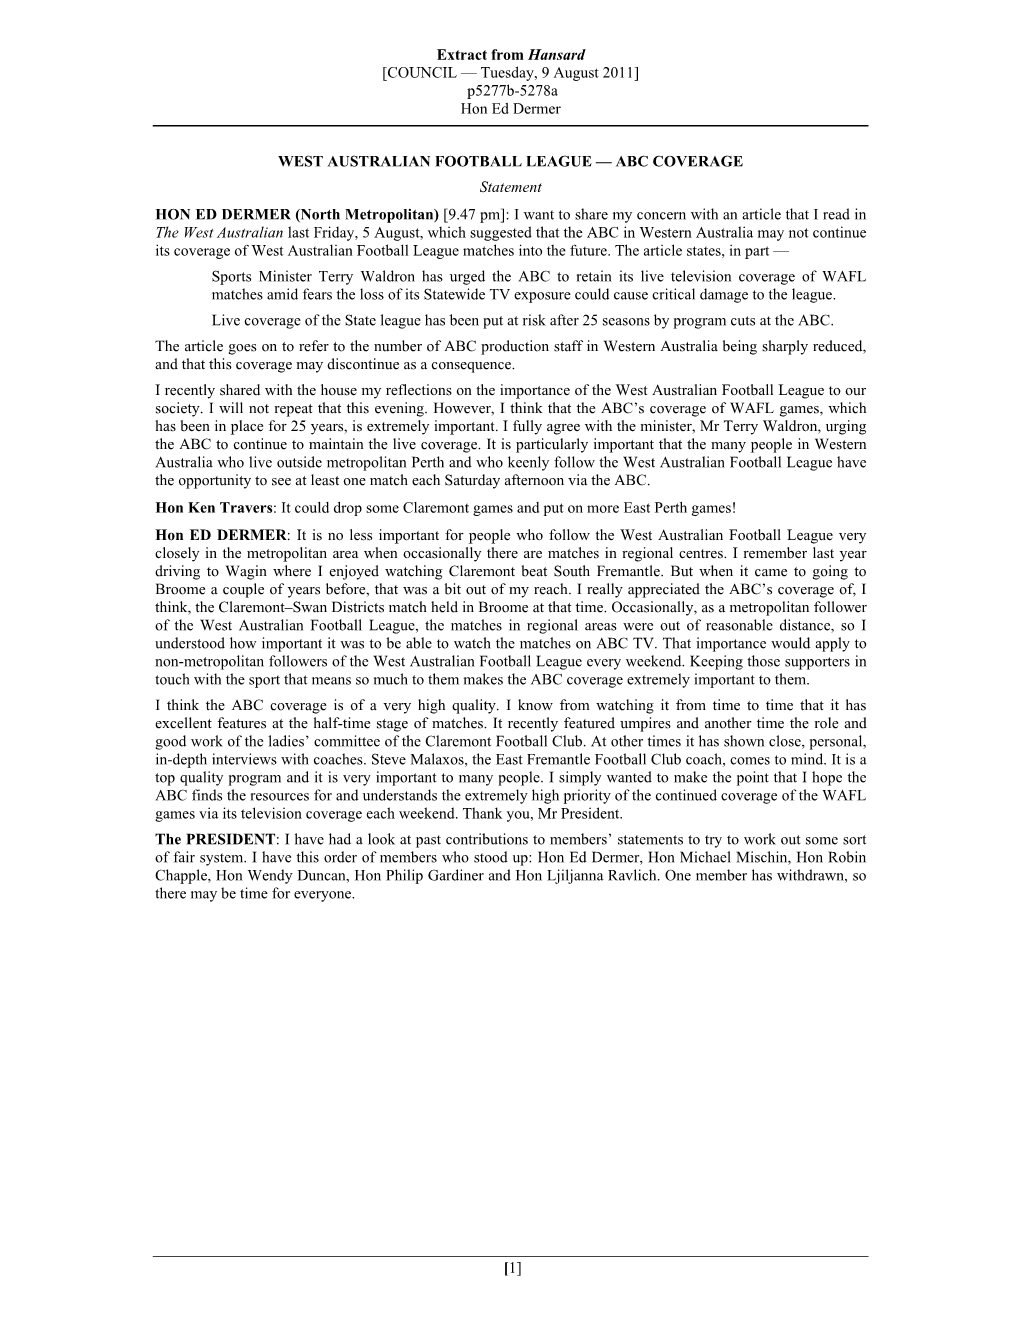 Extract from Hansard [COUNCIL — Tuesday, 9 August 2011] P5277b-5278A Hon Ed Dermer